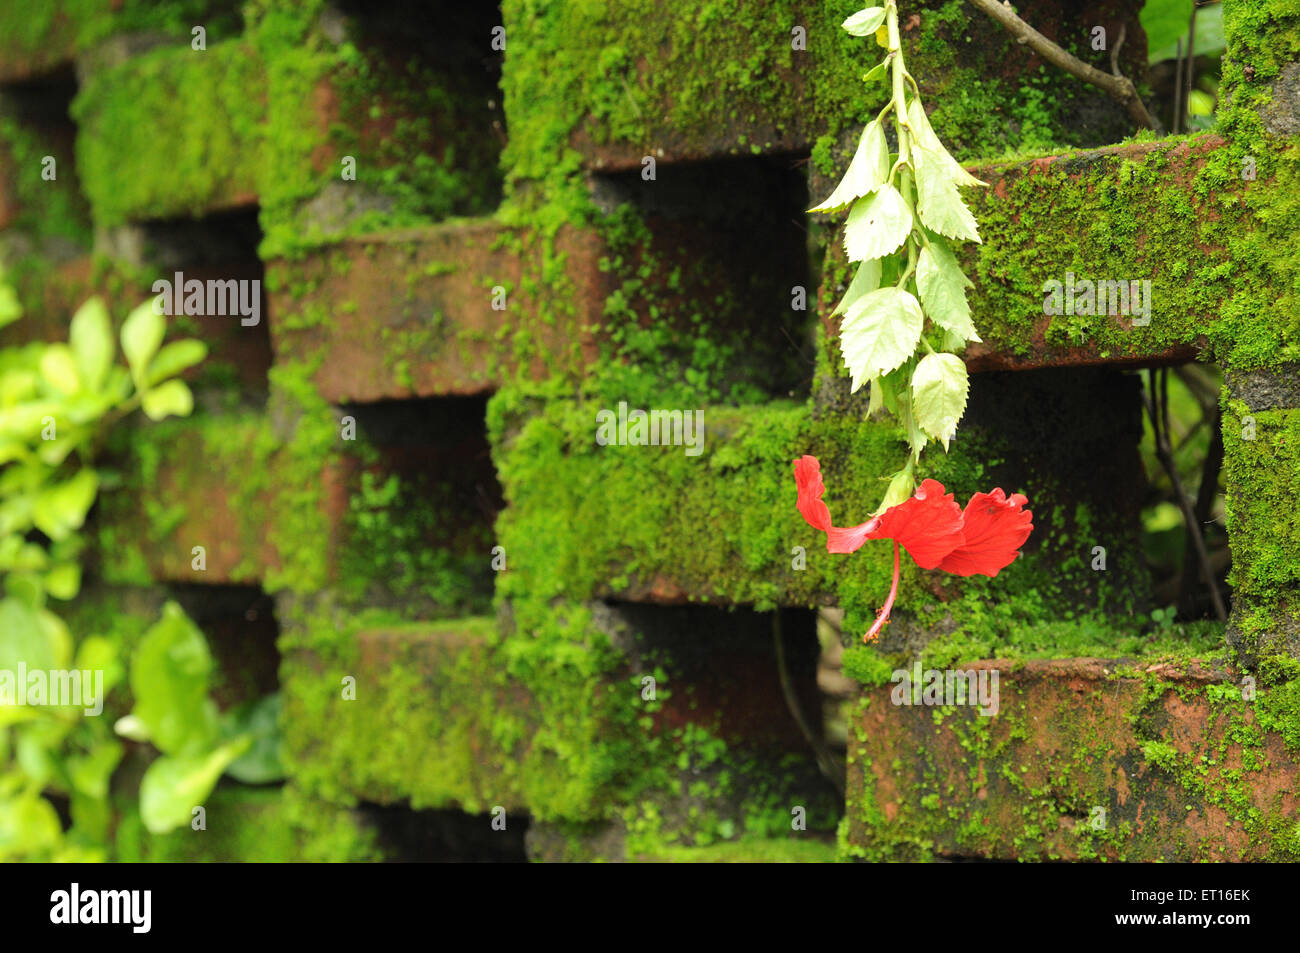 pared de ladrillo, musgo verde, hojas verdes Foto de stock